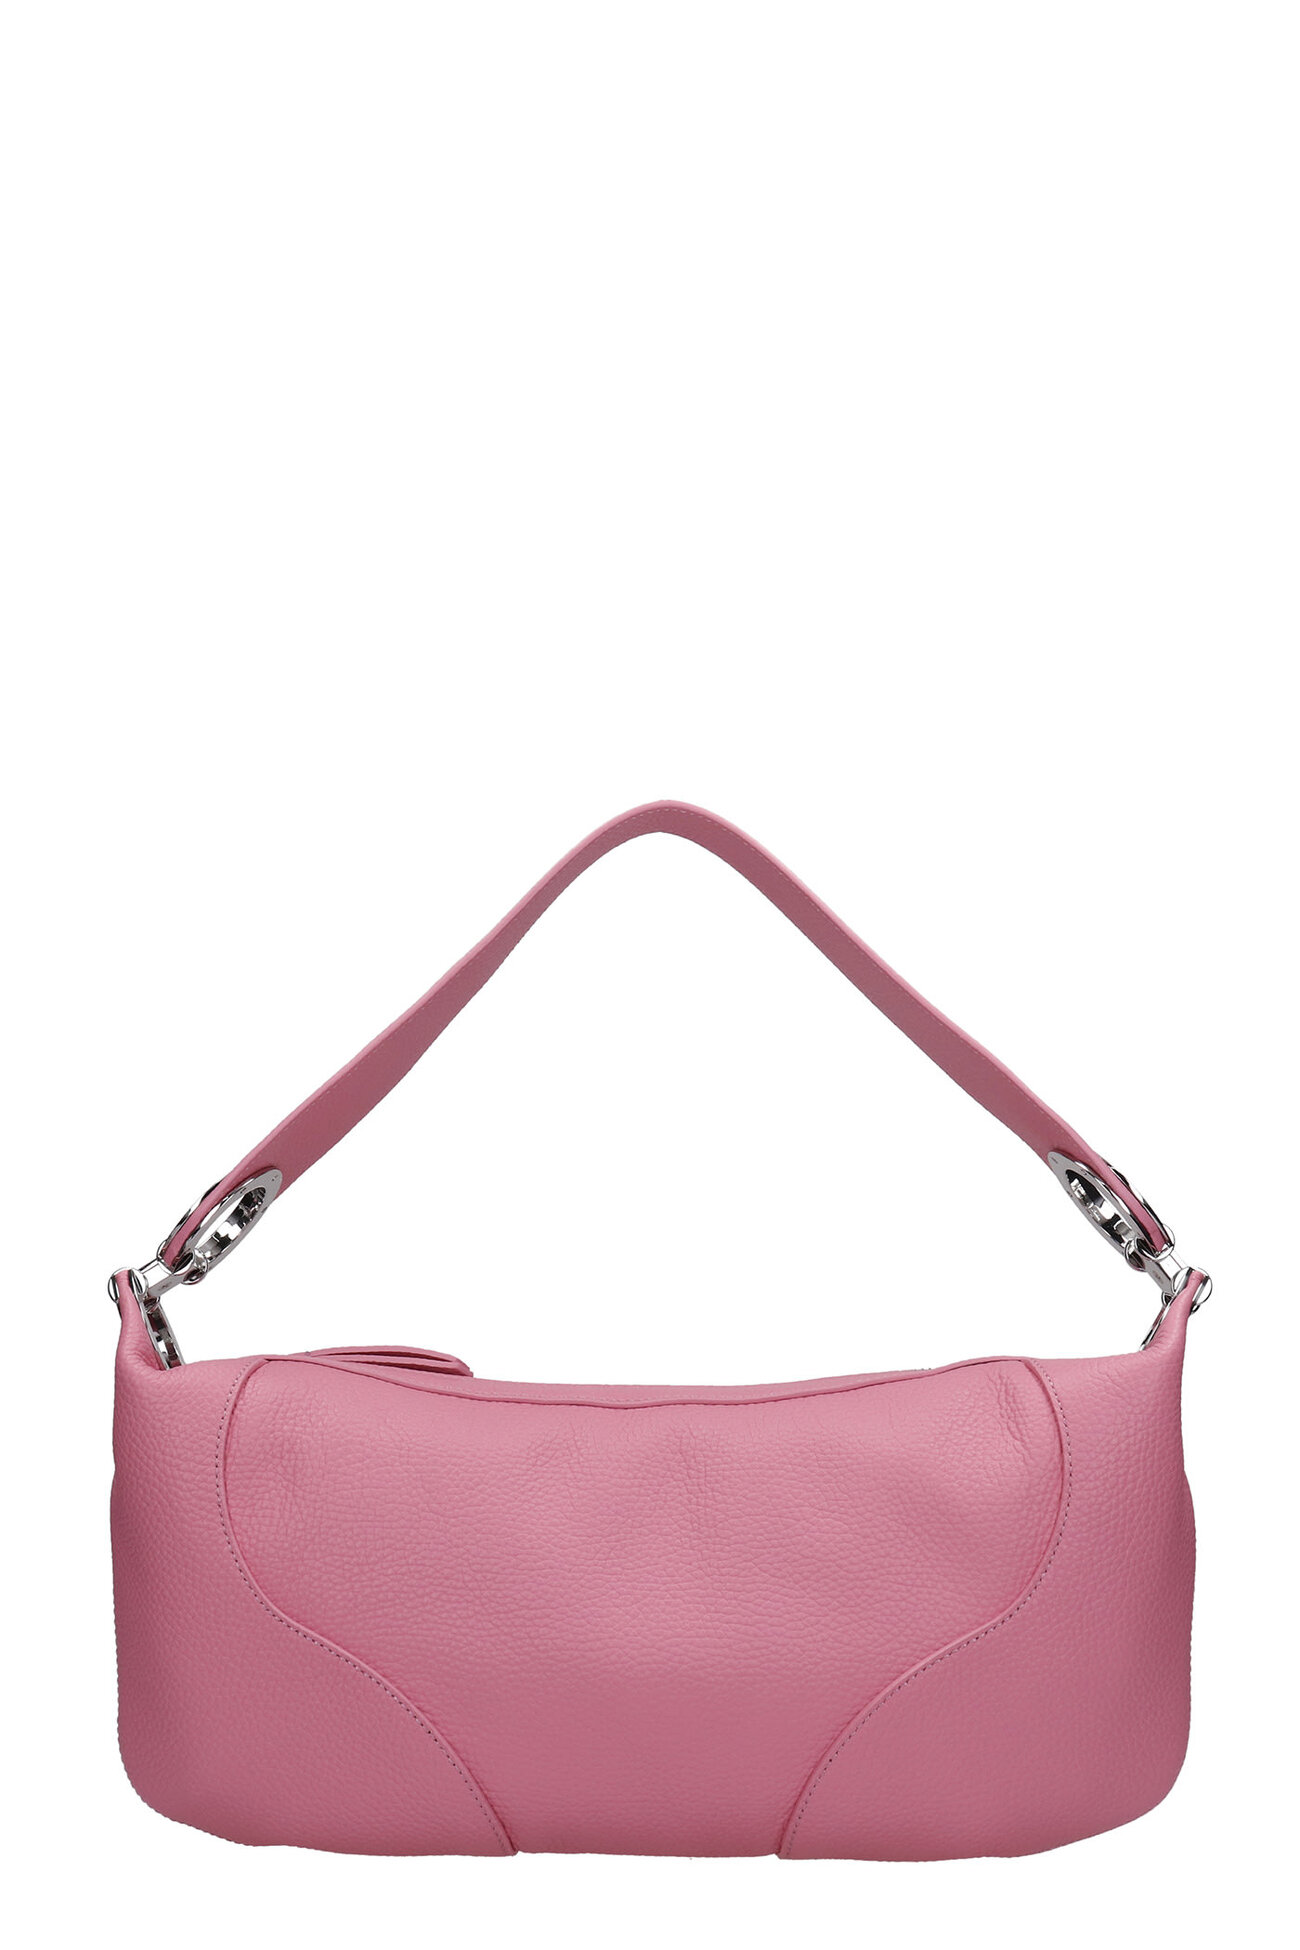 BY FAR Shoulder Bag In Rose-pink Leather